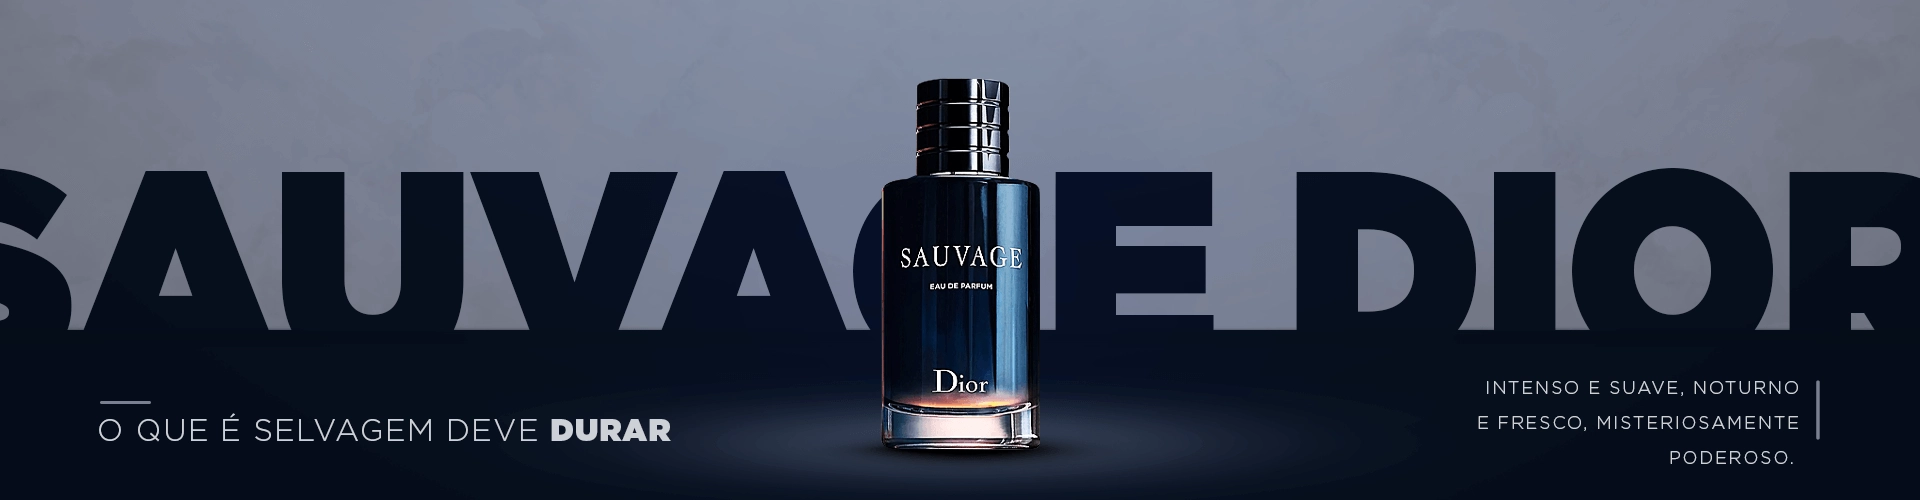 Slider - Perfume Dior Sauvage